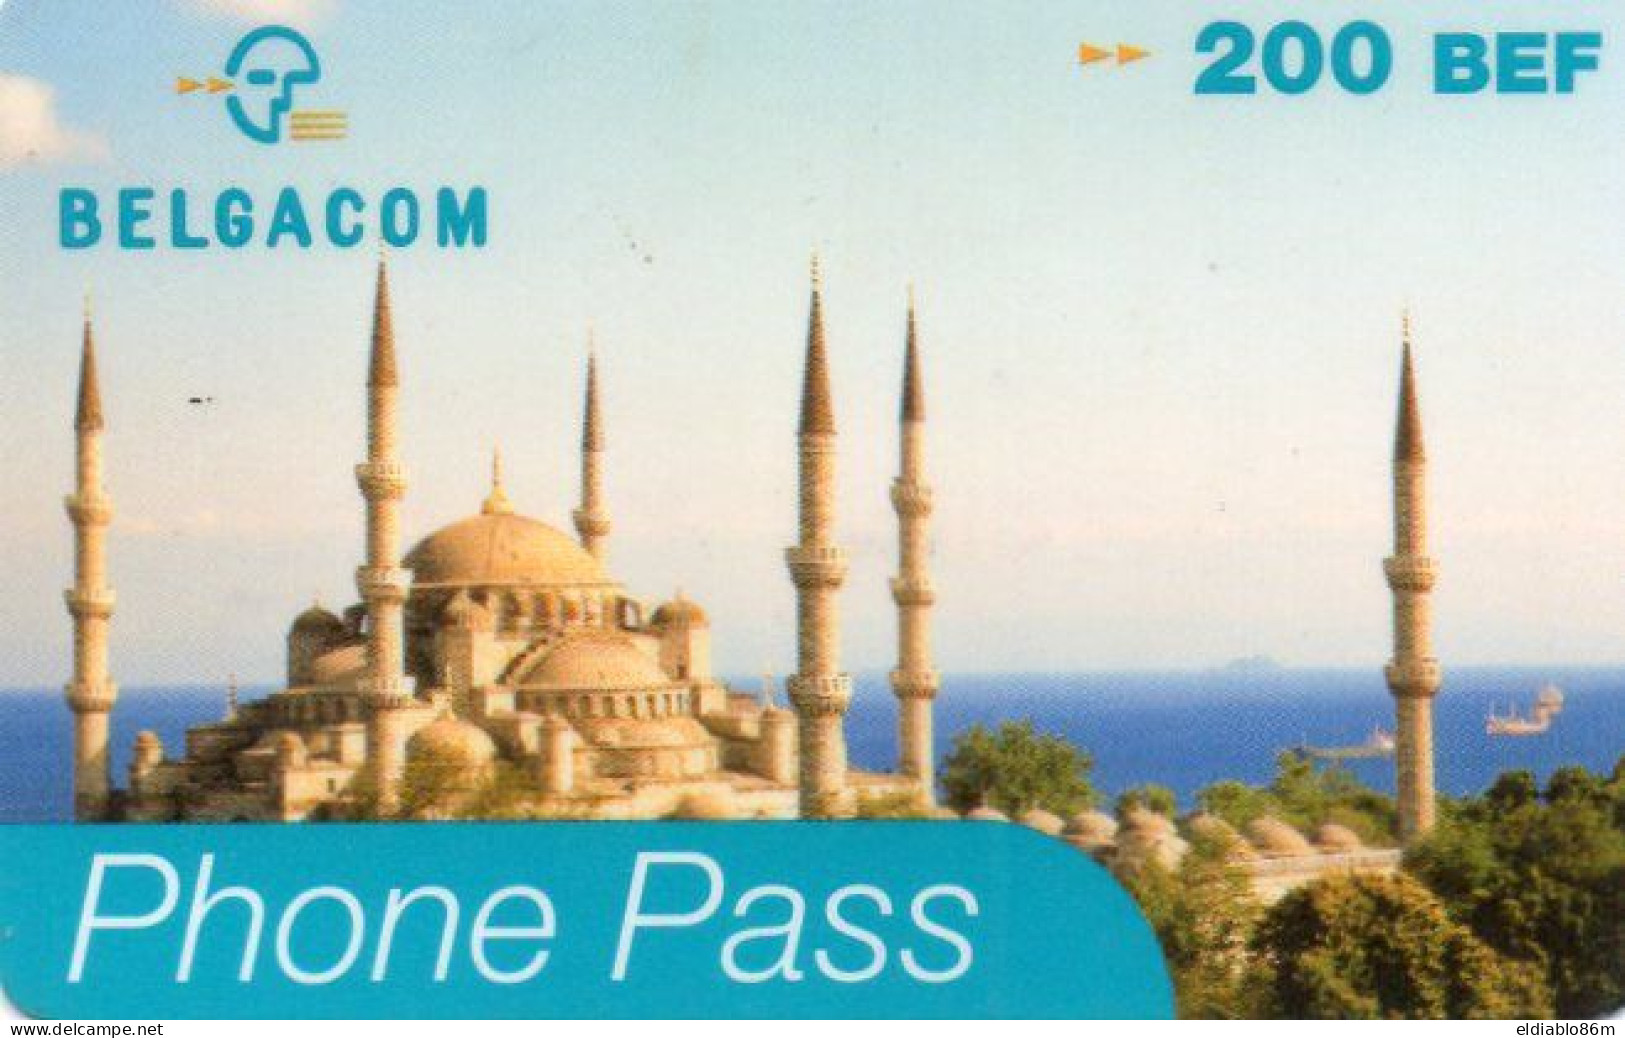 BELGIUM - PREPAID - BELGACOM - PHONE PASS - HAGIA SOPHIA ISTANBUL - TURKEY RELATED - GSM-Kaarten, Herlaadbaar & Voorafbetaald